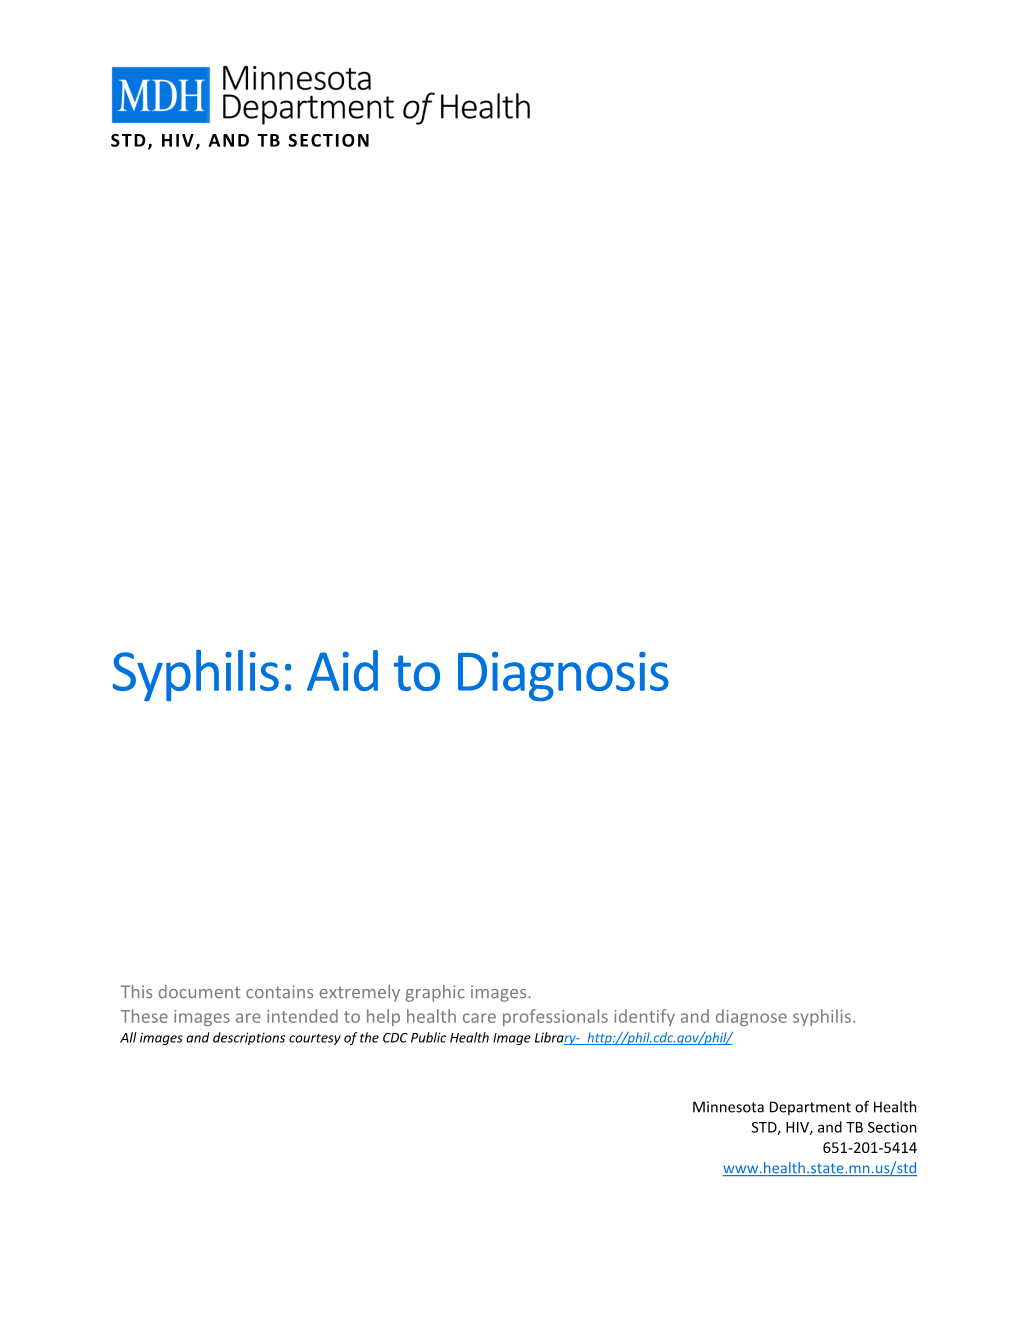 Syphilis: Aid to Diagnosis